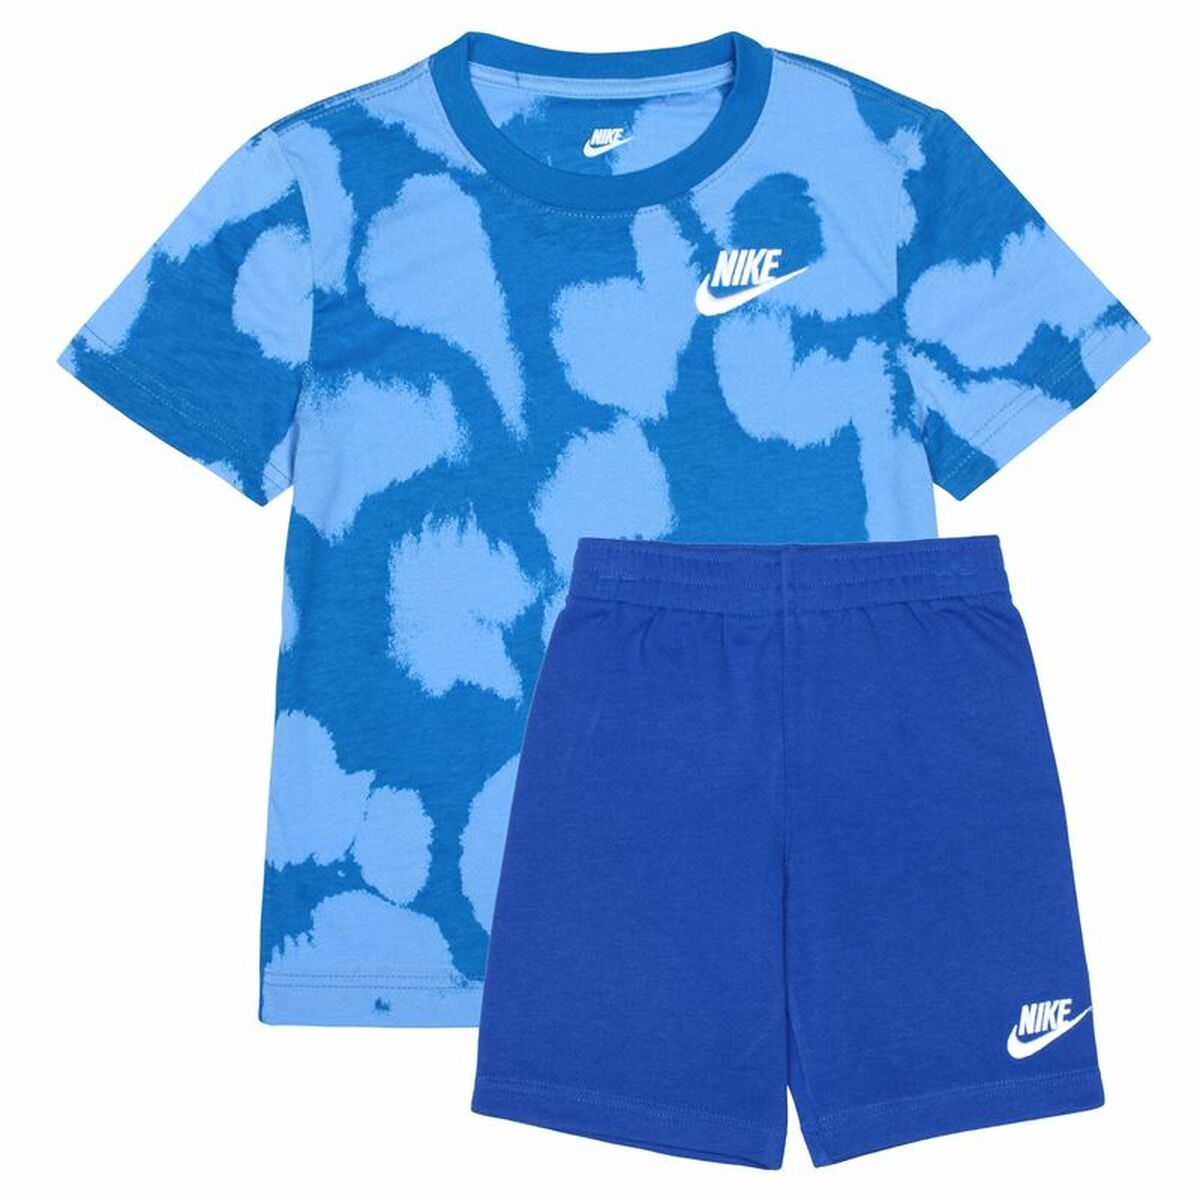 Completo Sportivo per Bambini Nike Dye Dot Azzurro